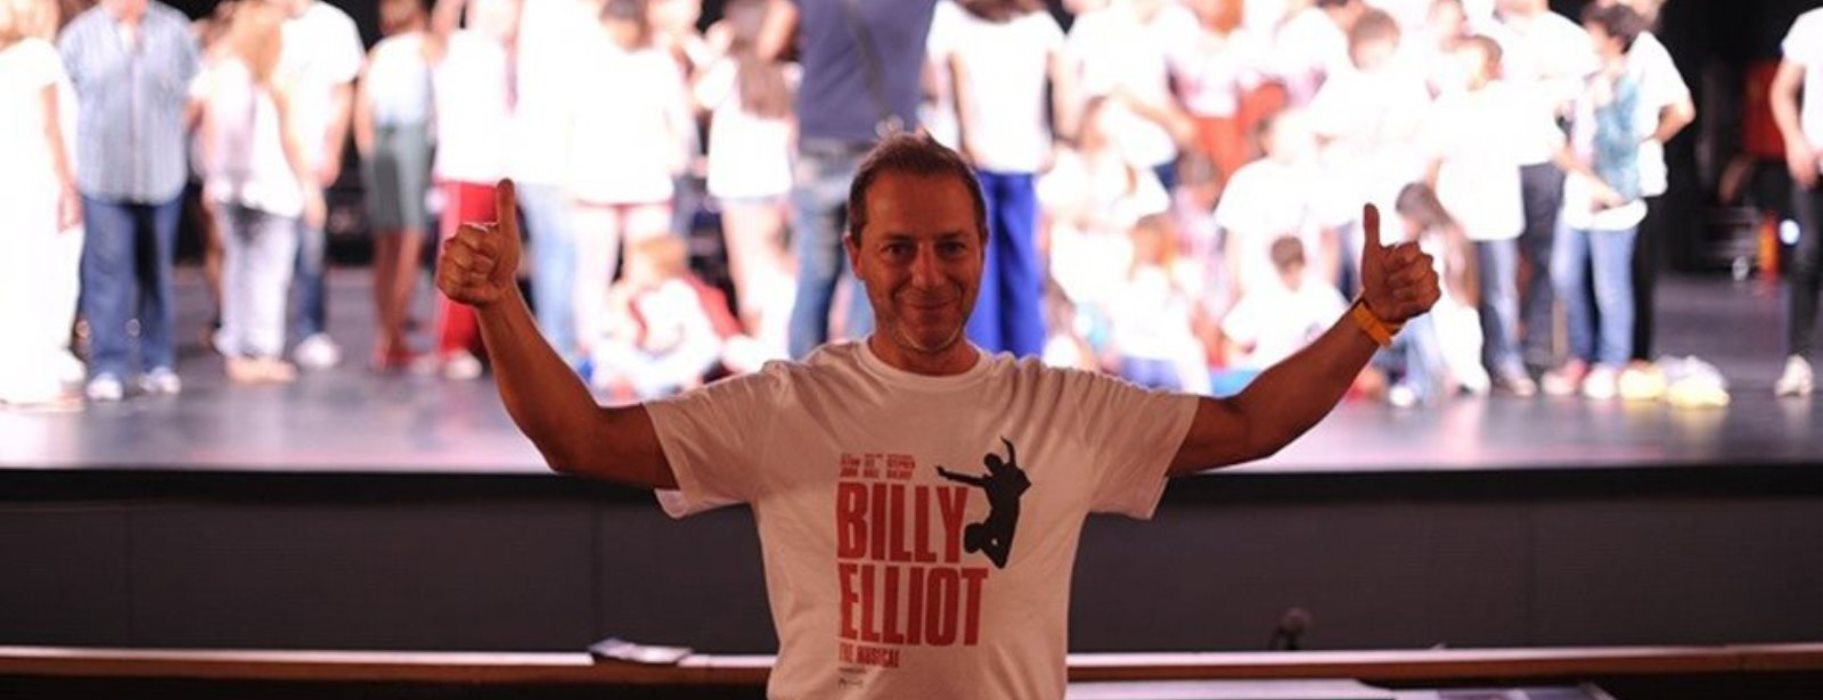 Billy Elliot: Οι αντιδράσεις που είχε προκαλέσει το 2015 το μιούζικαλ που είχε ανεβάσει ο Λιγνάδης